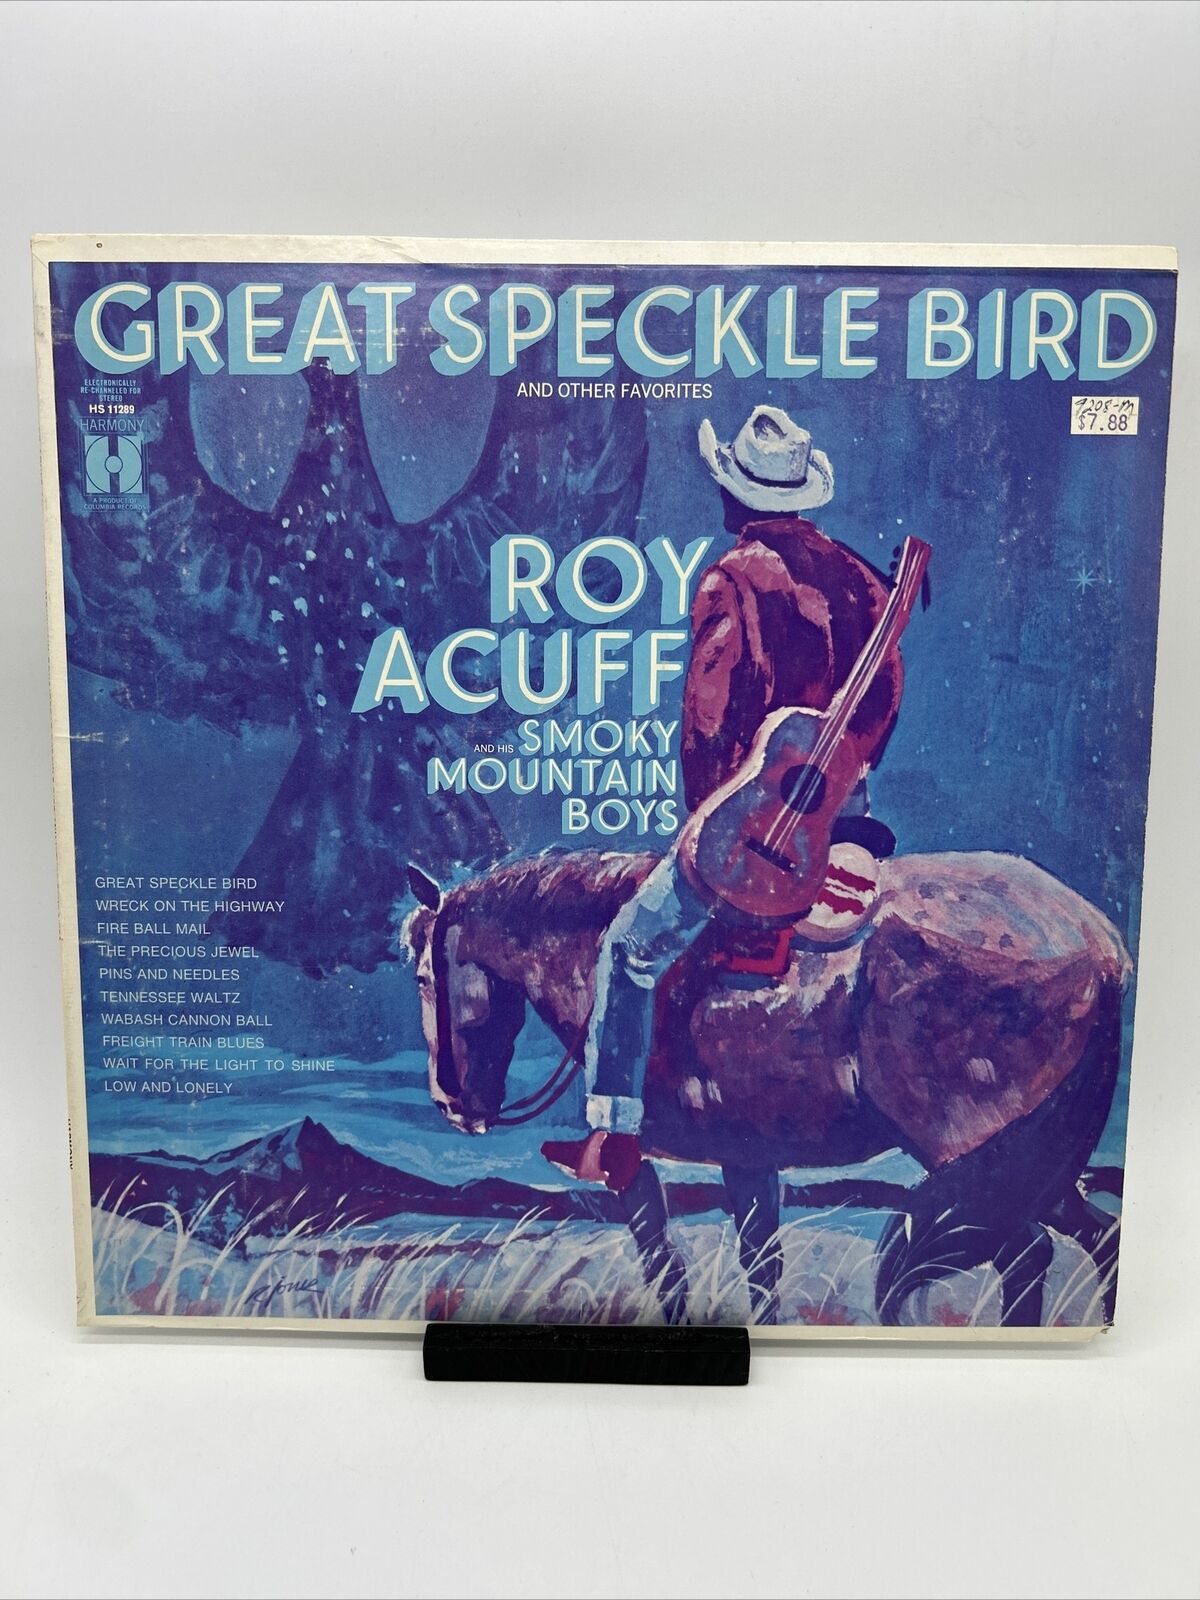 Roy Acuff And His Smoky Mountain Boys Vinyl LP Harmony Records HS 11289